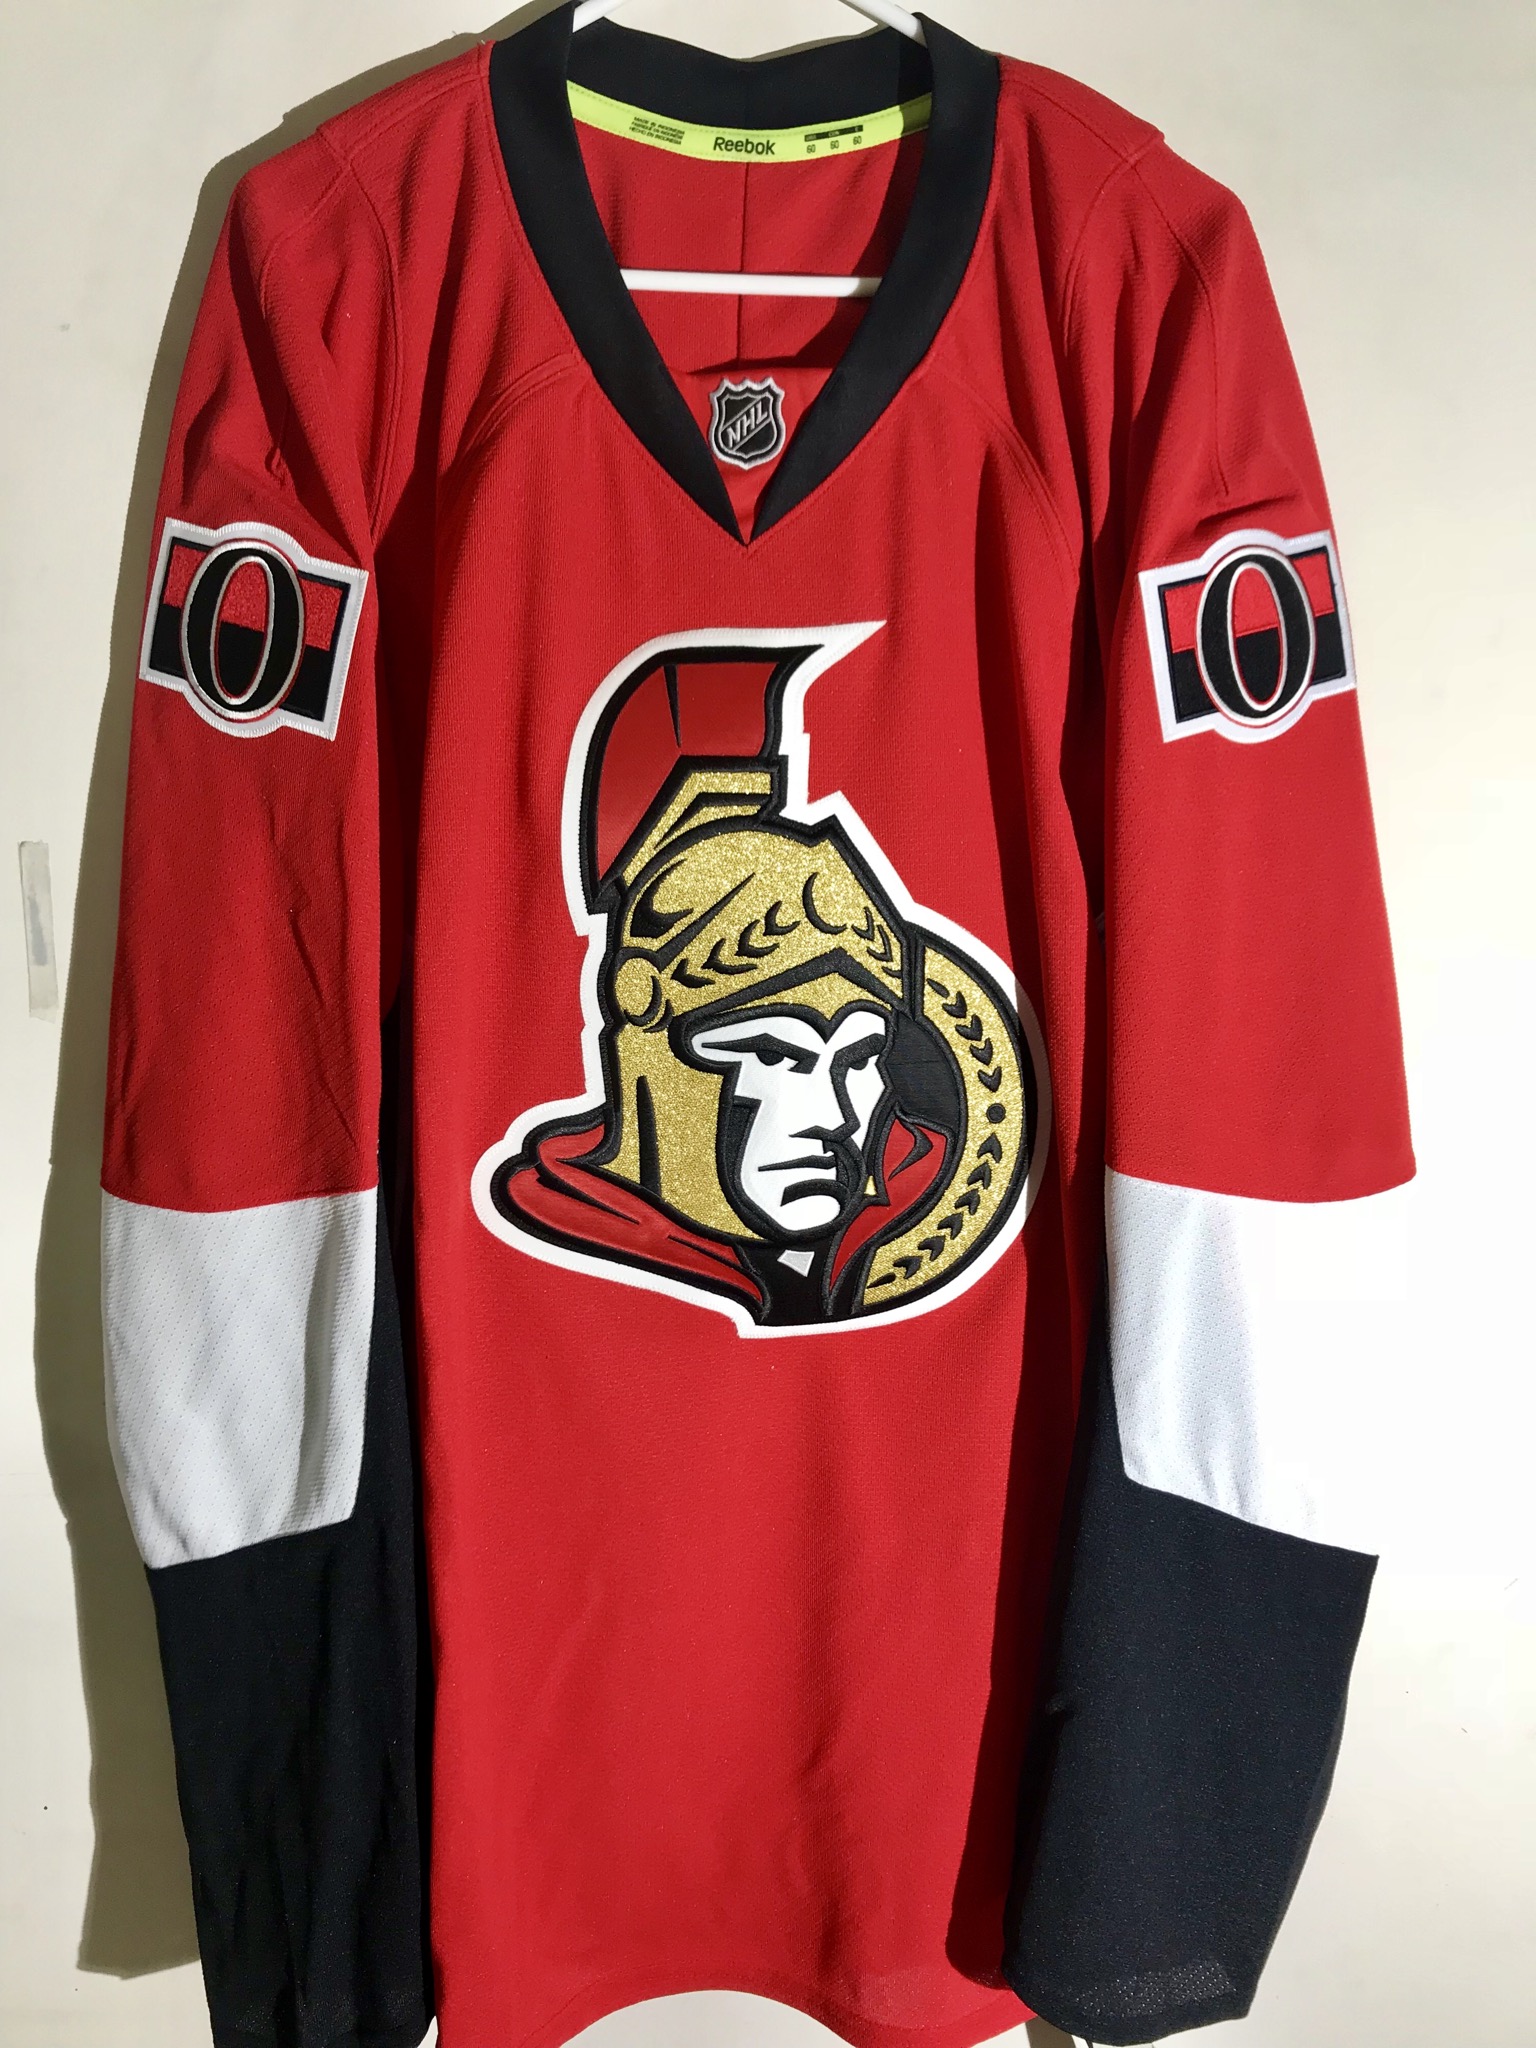 Reebok Authentic NHL Jersey Ottawa Senators Team Red sz 52 | eBay